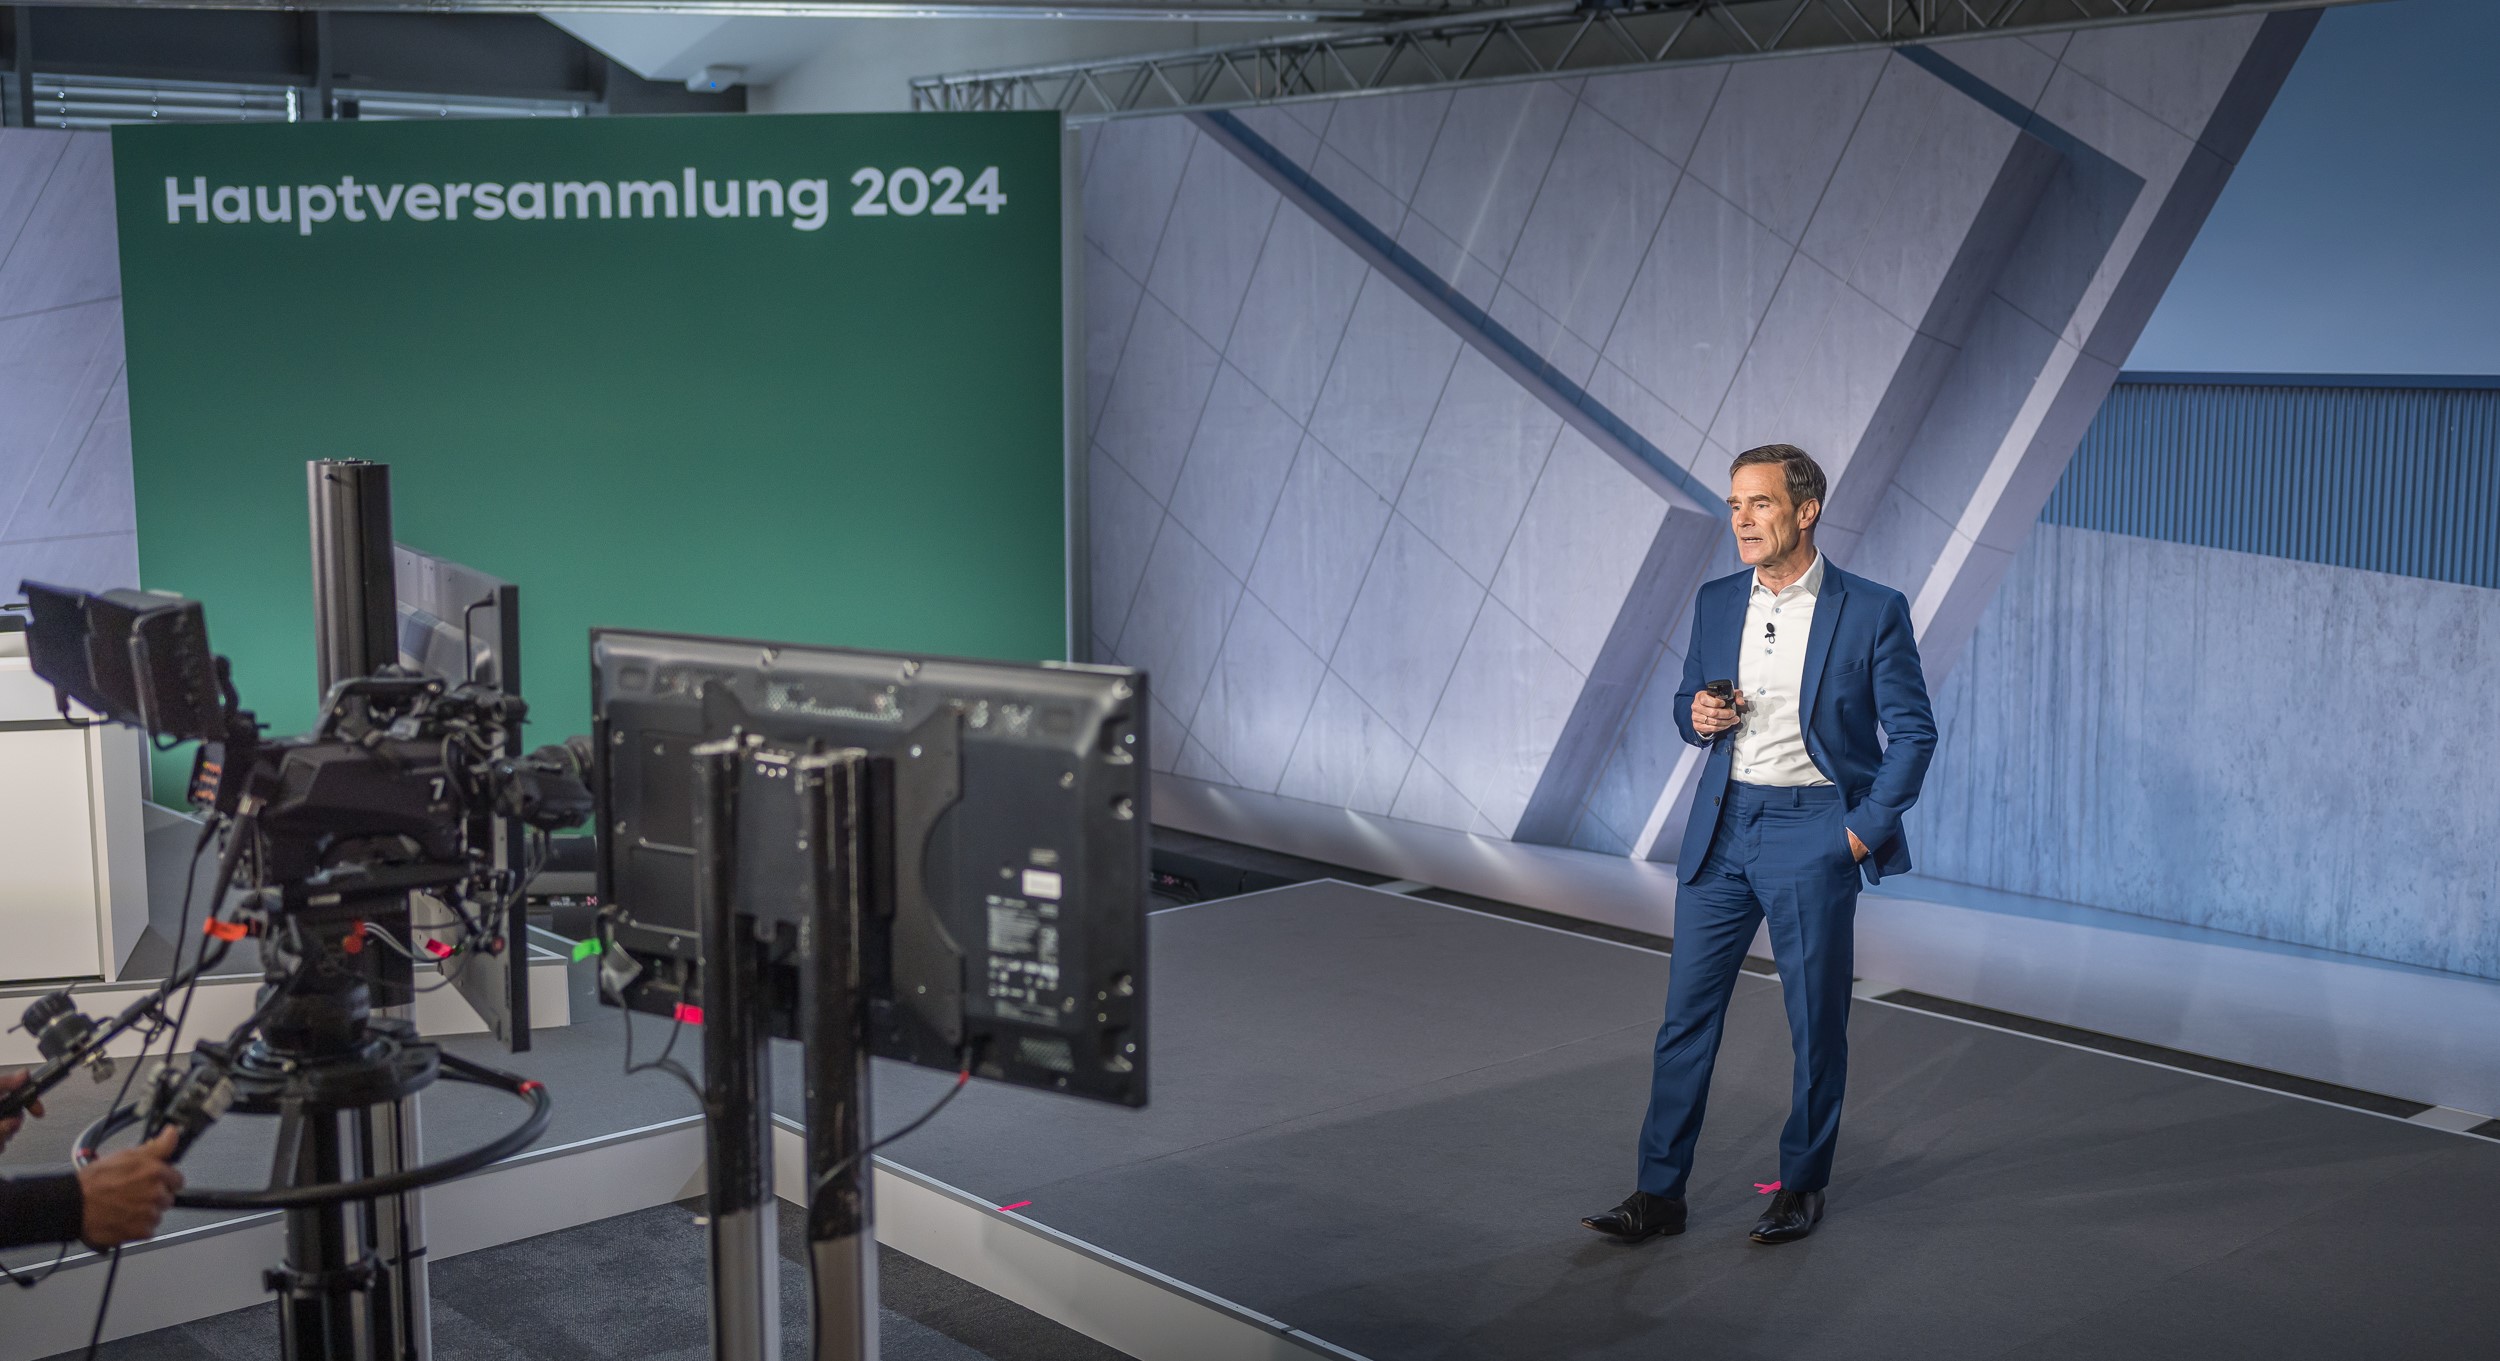 Dr Dominik von Achten standing on a stage in front of monitors